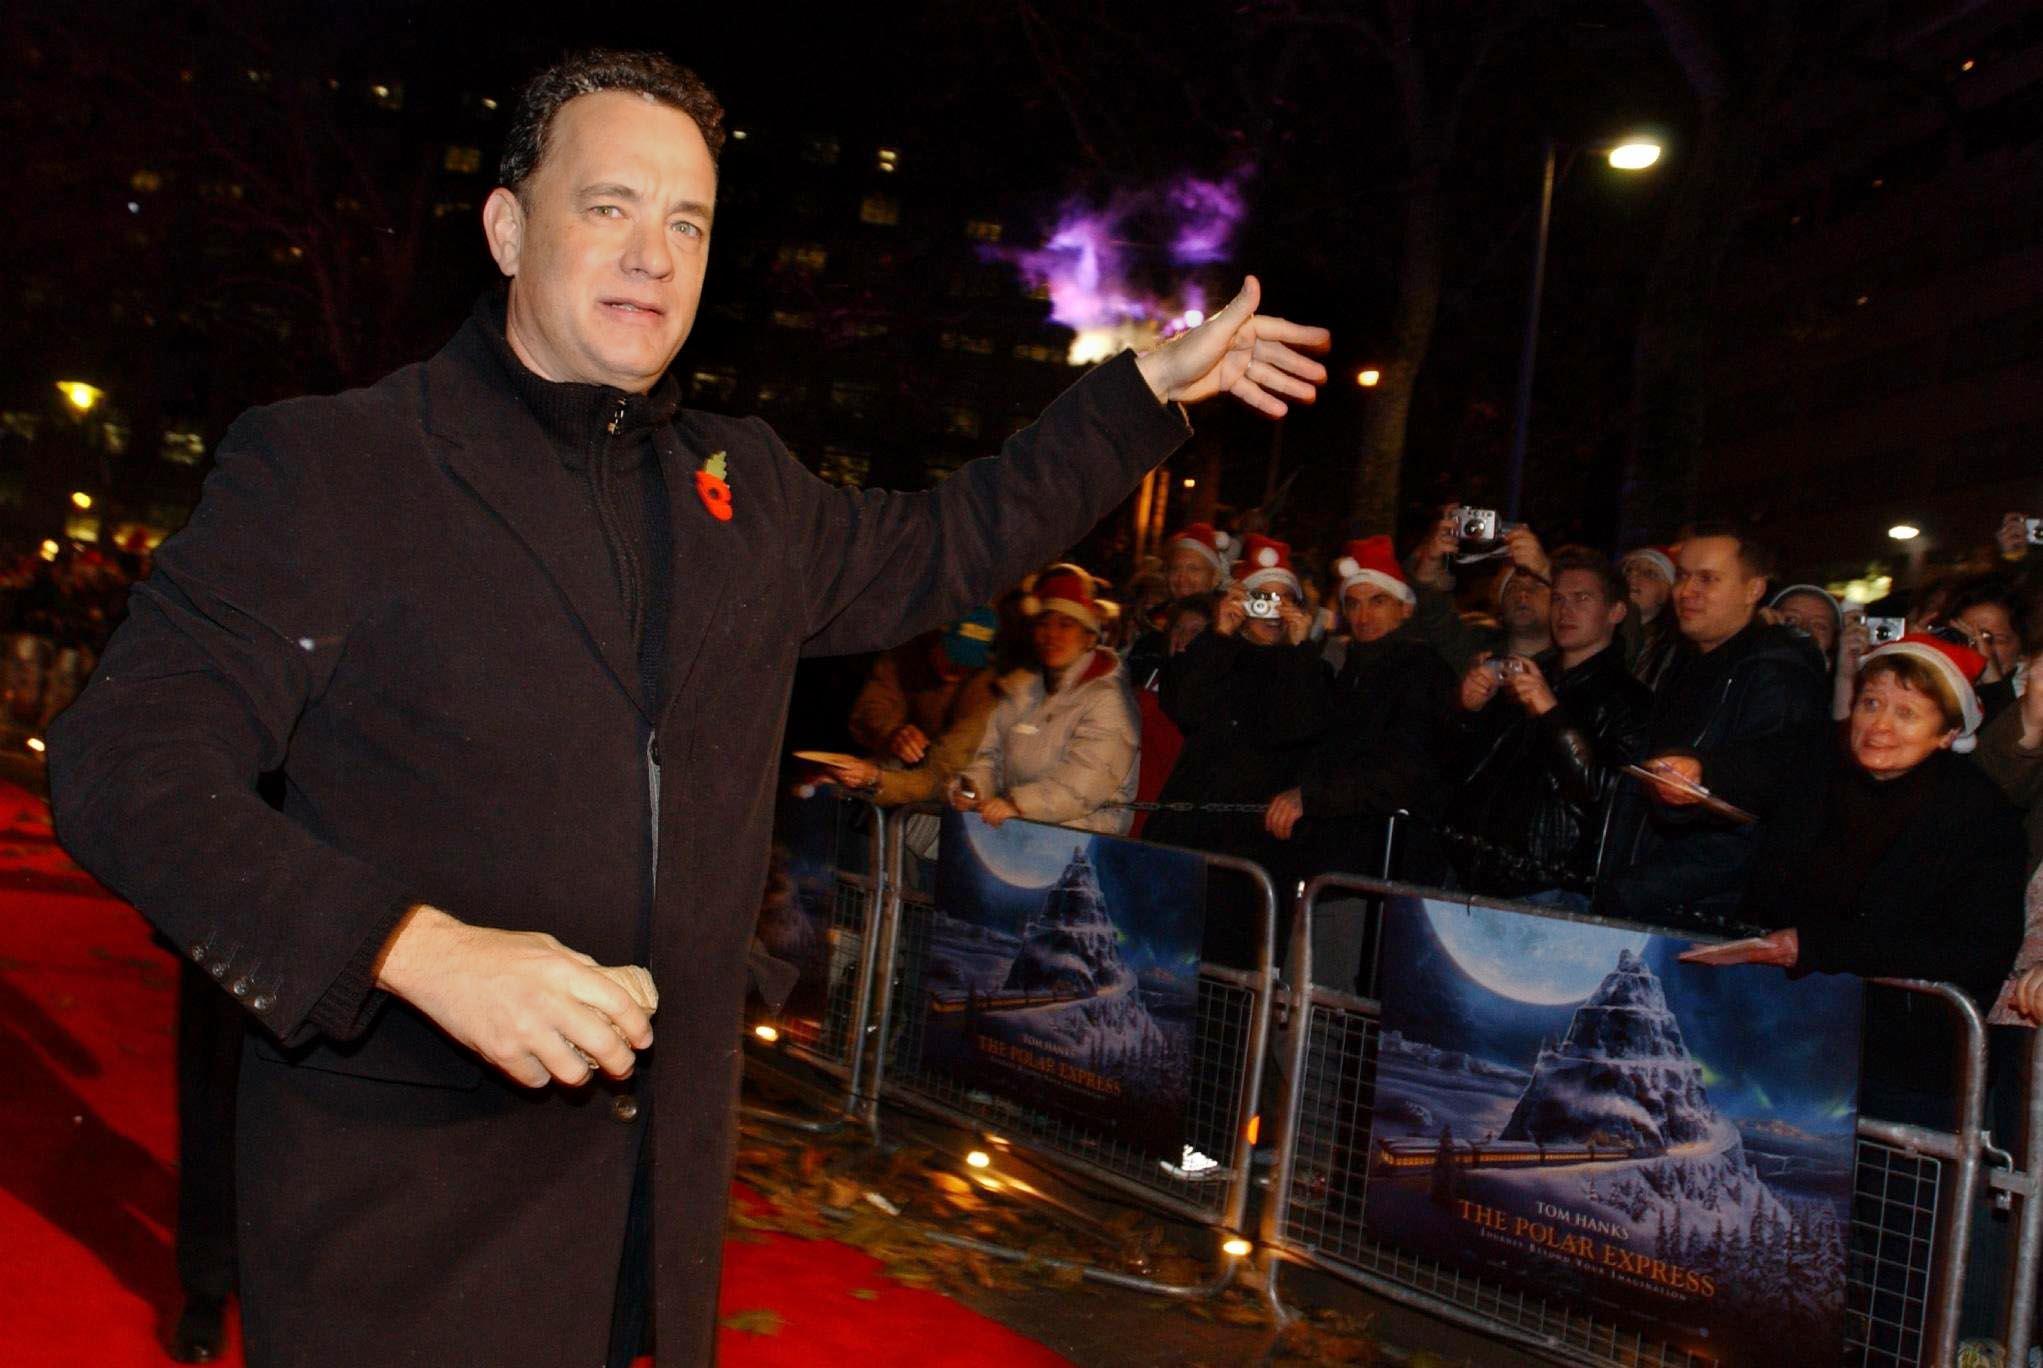 Tom Hanks at the Polar Express premiere